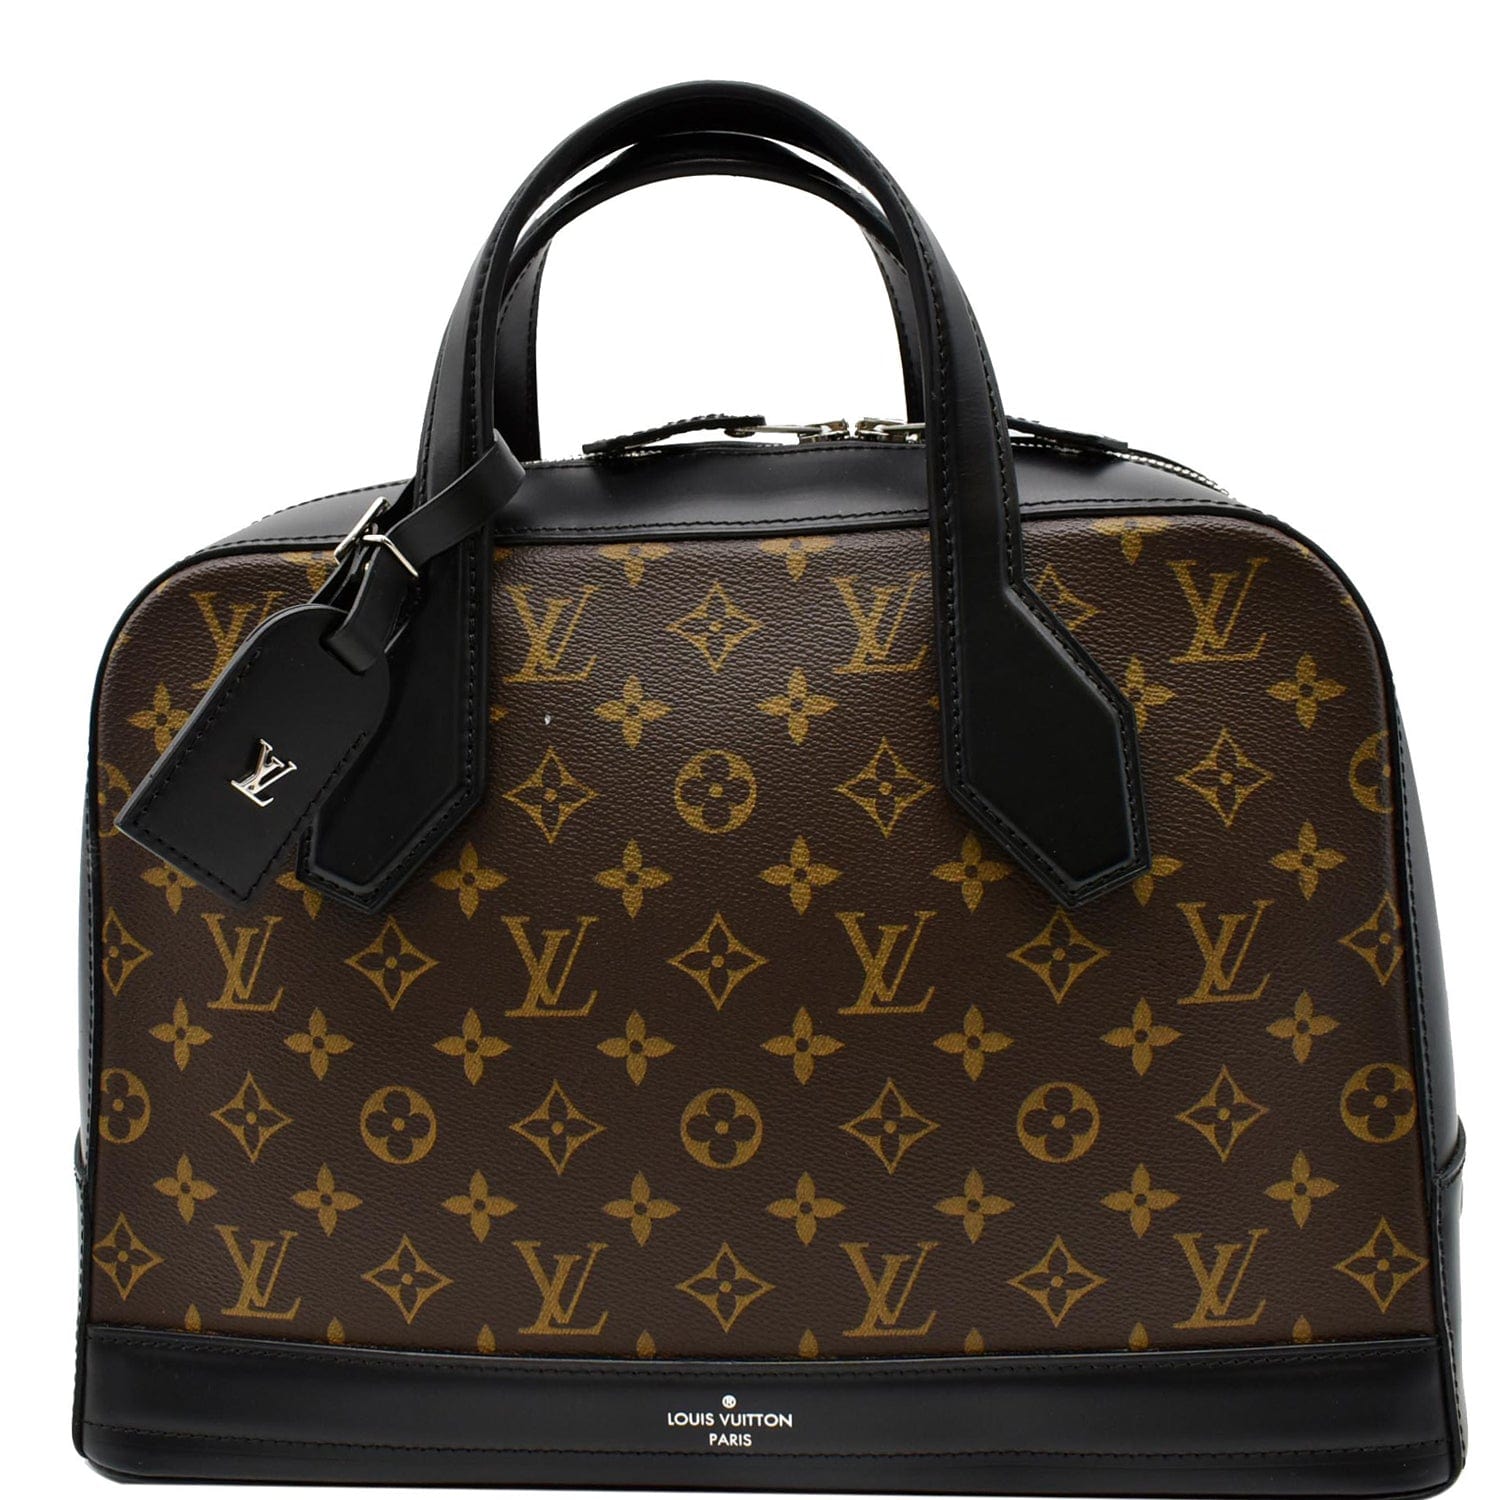 LYST - Louis Vuitton Dora Medium Name a more iconic bag